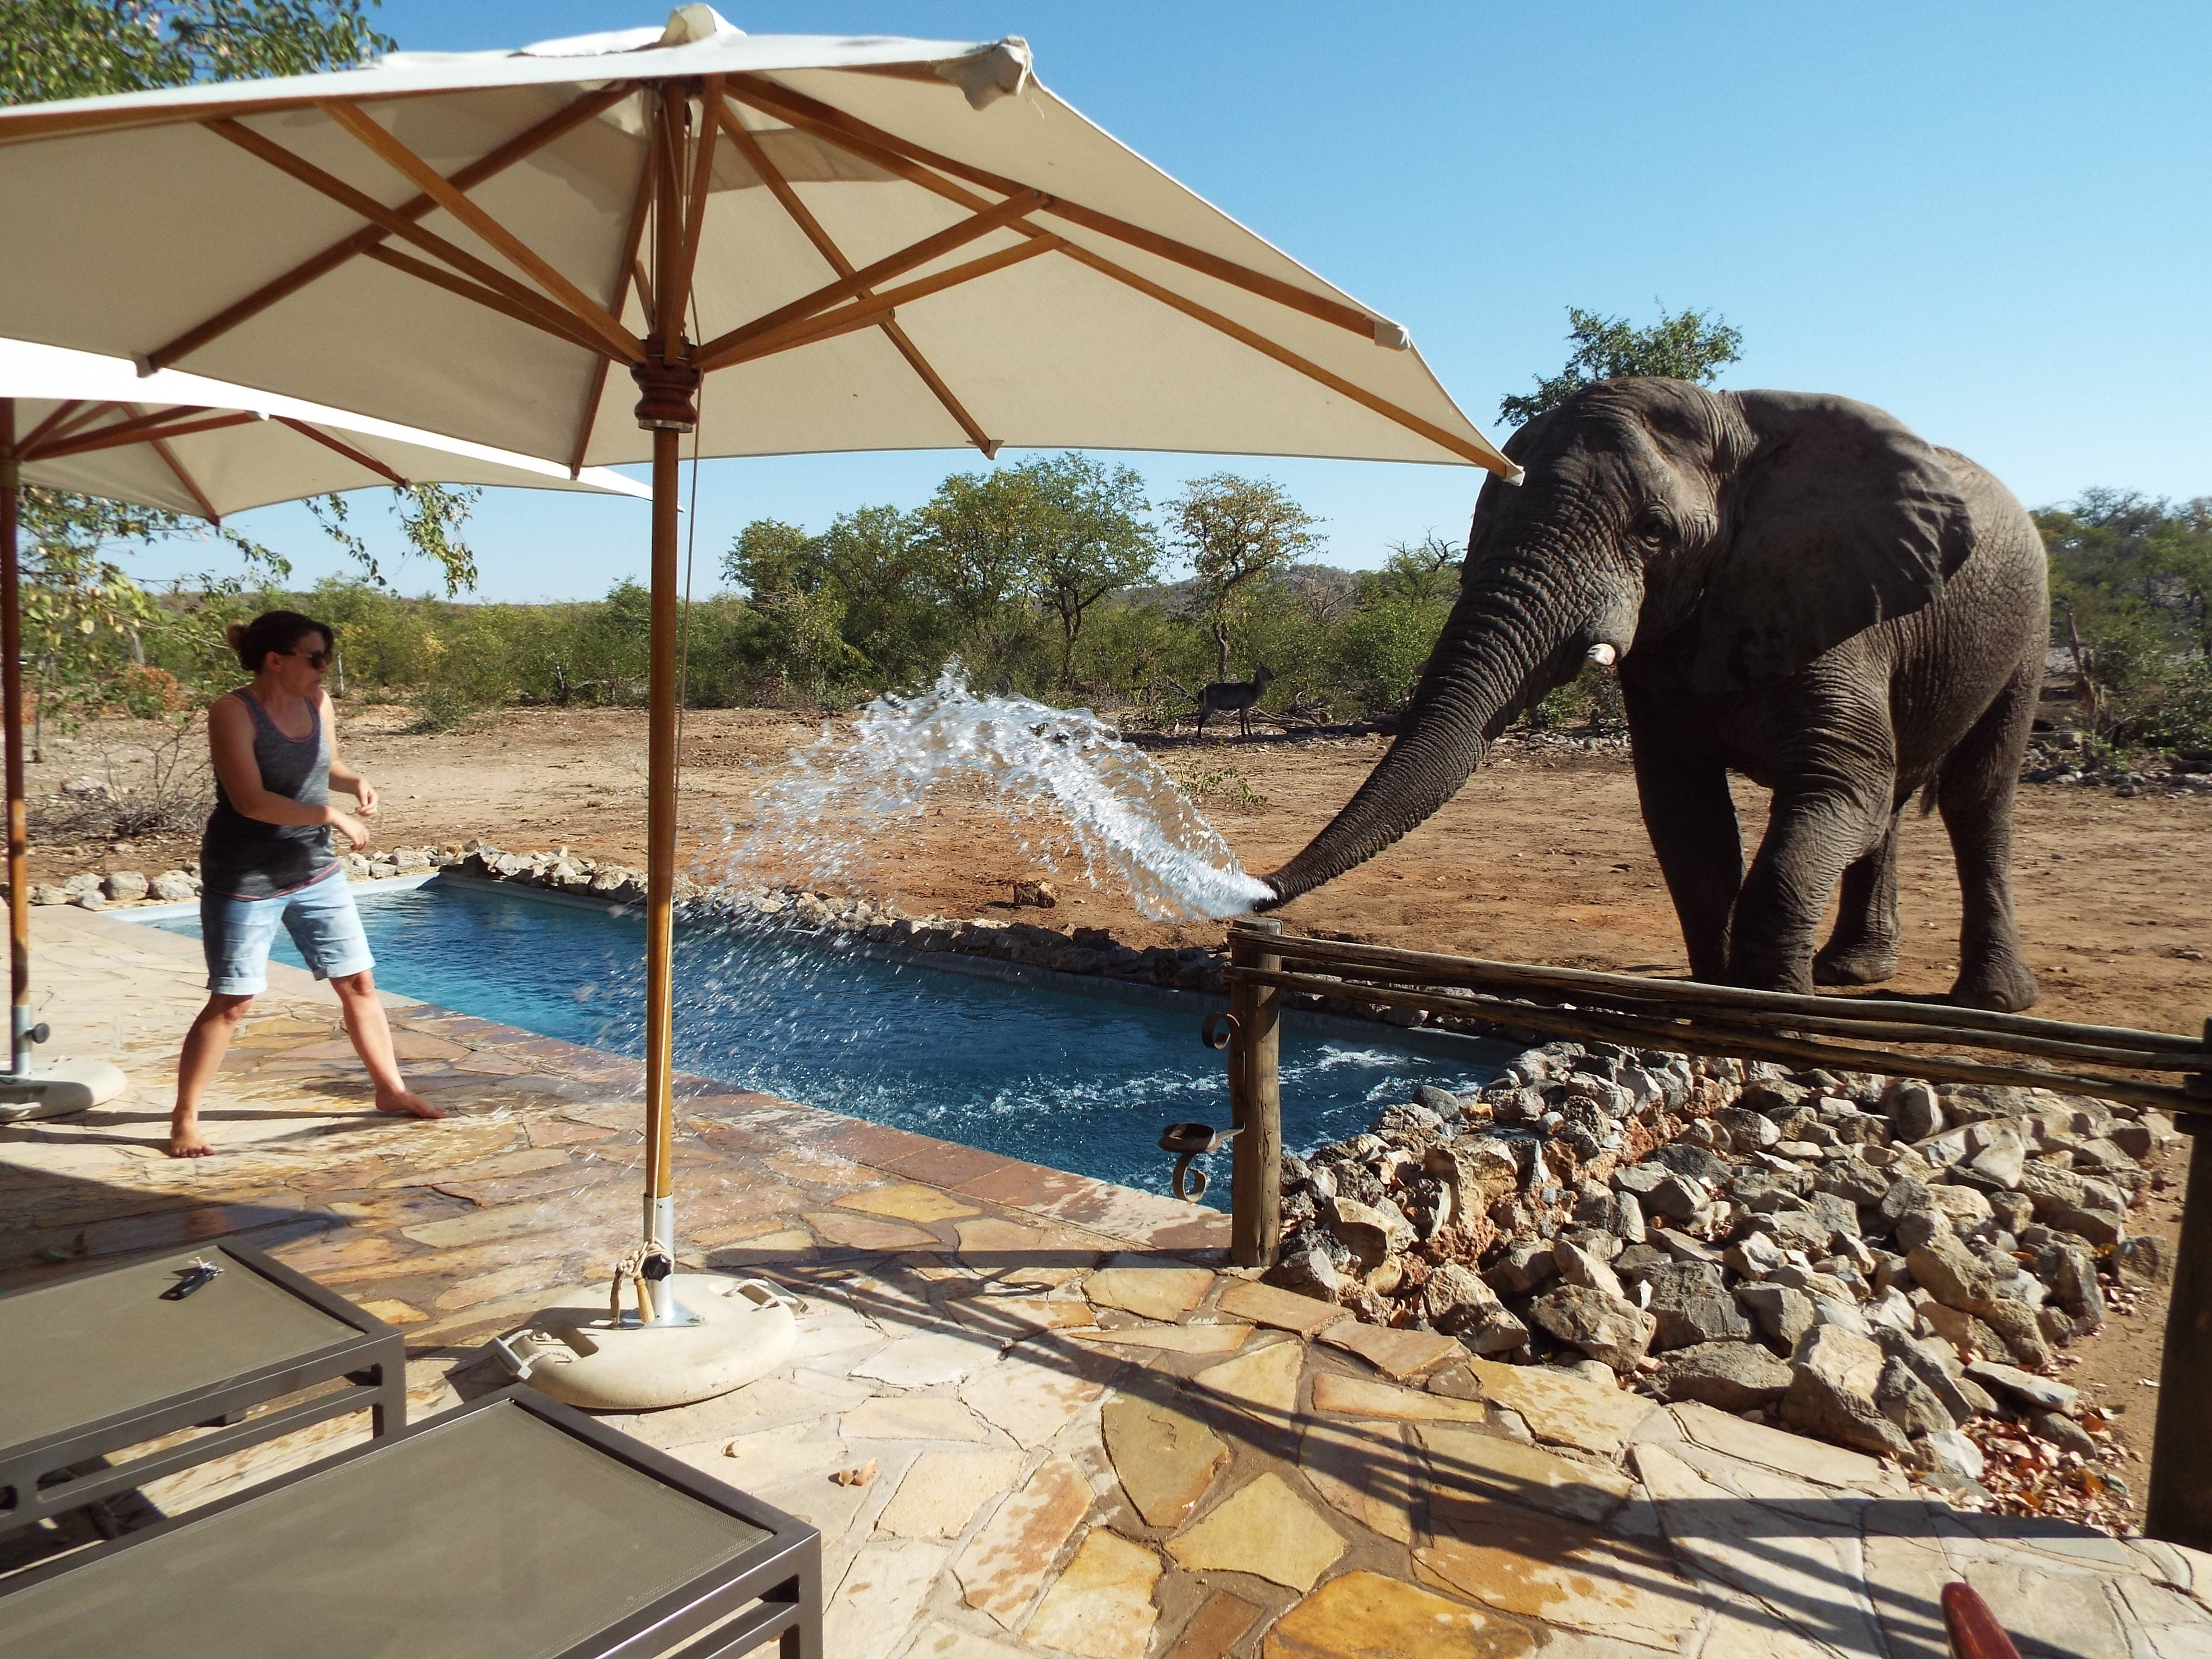 Jo at safari lodge by pool, elephant spray